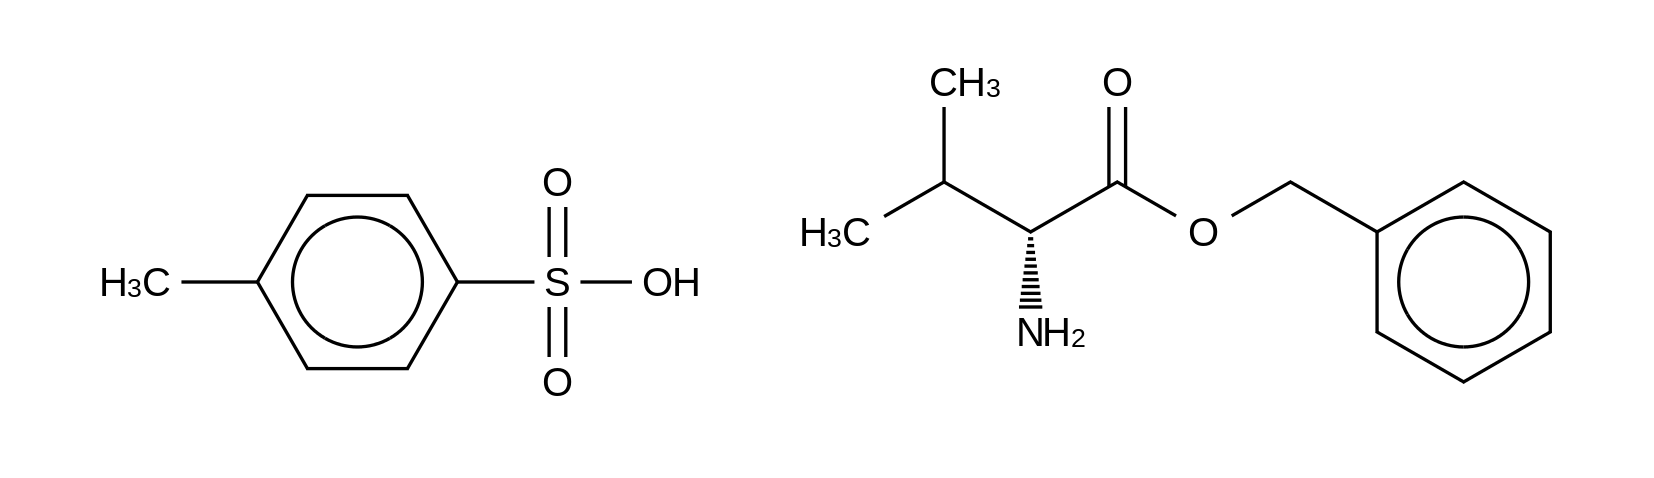 D-Valine Benzyl Ester p-Toluenesulfonate